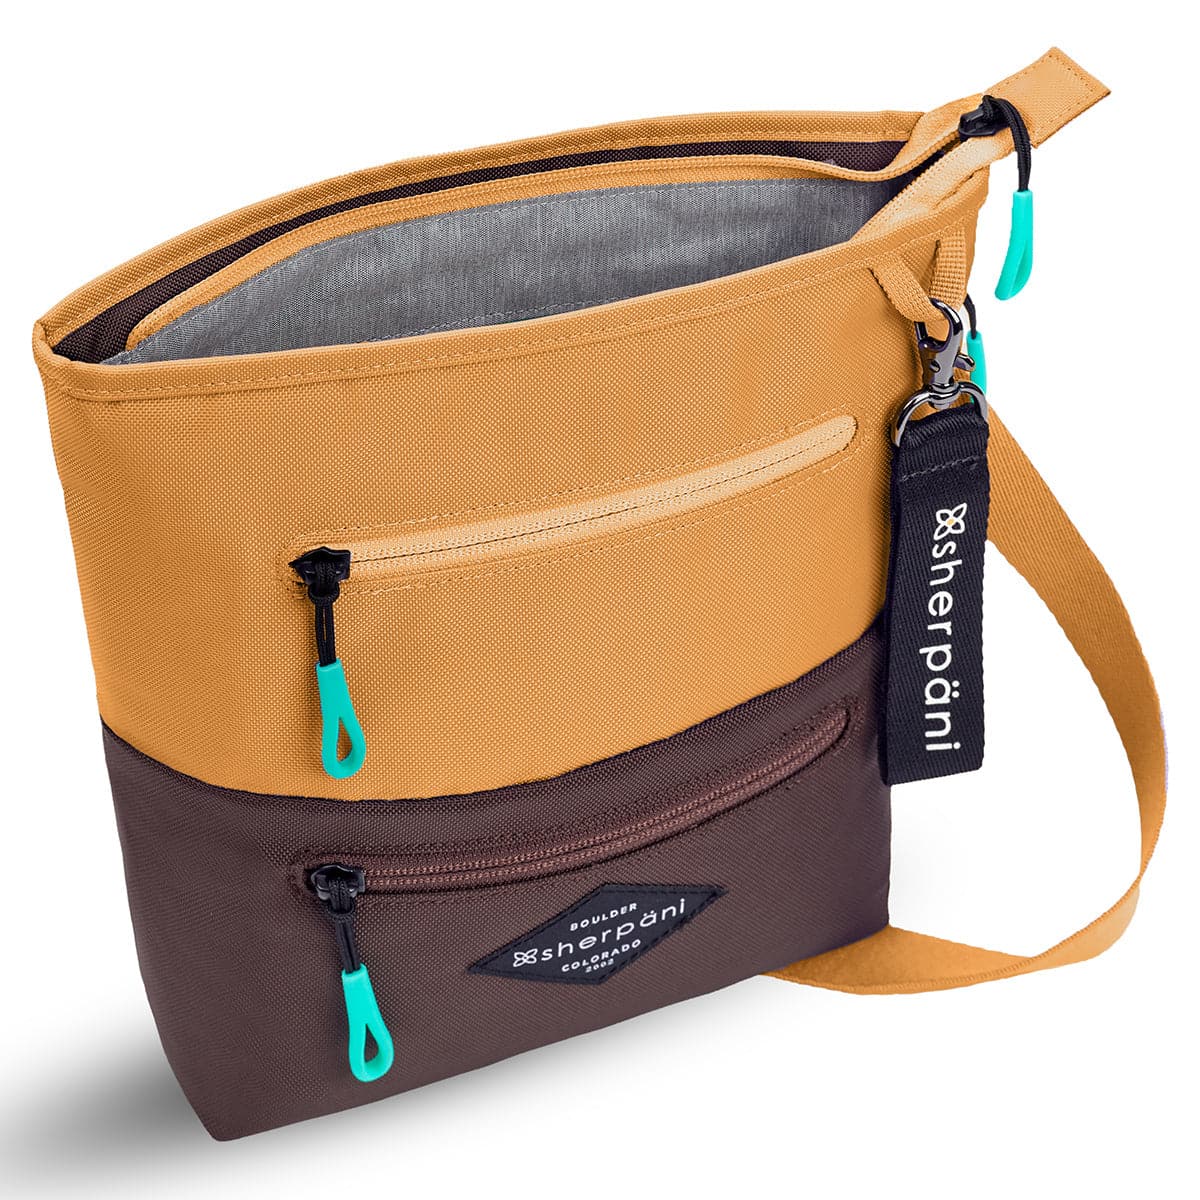 Sherpani Essentials Sadie Lightweight Crossbody Bag